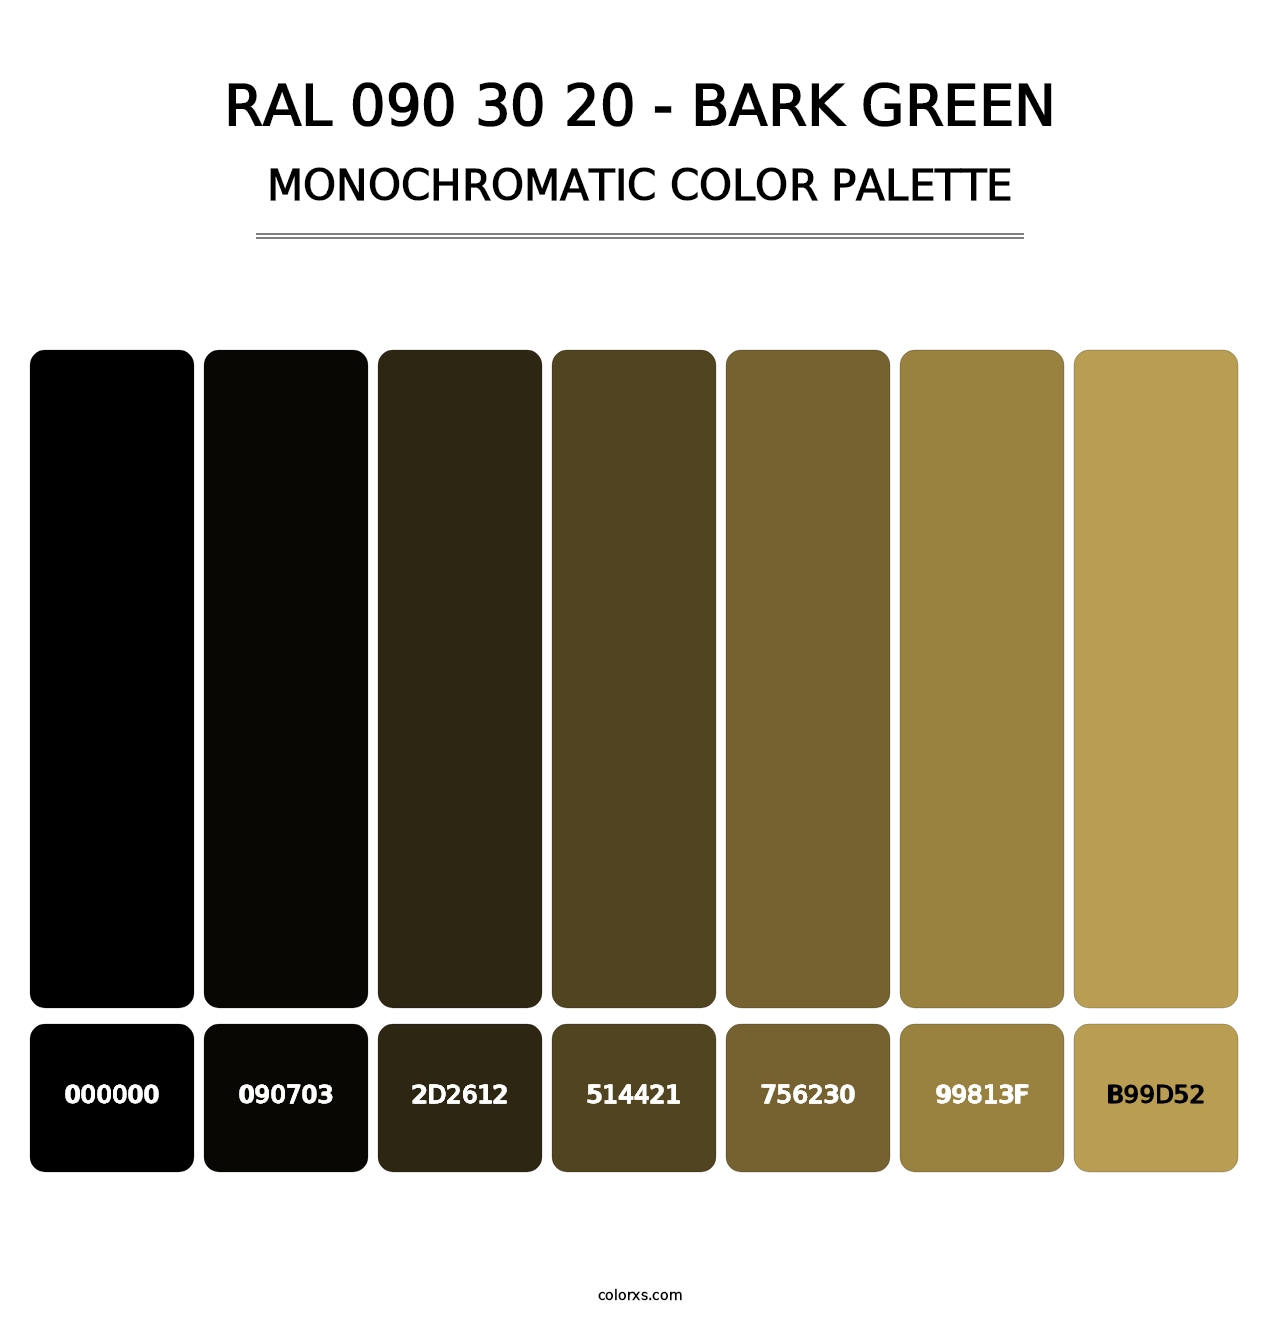 RAL 090 30 20 - Bark Green - Monochromatic Color Palette